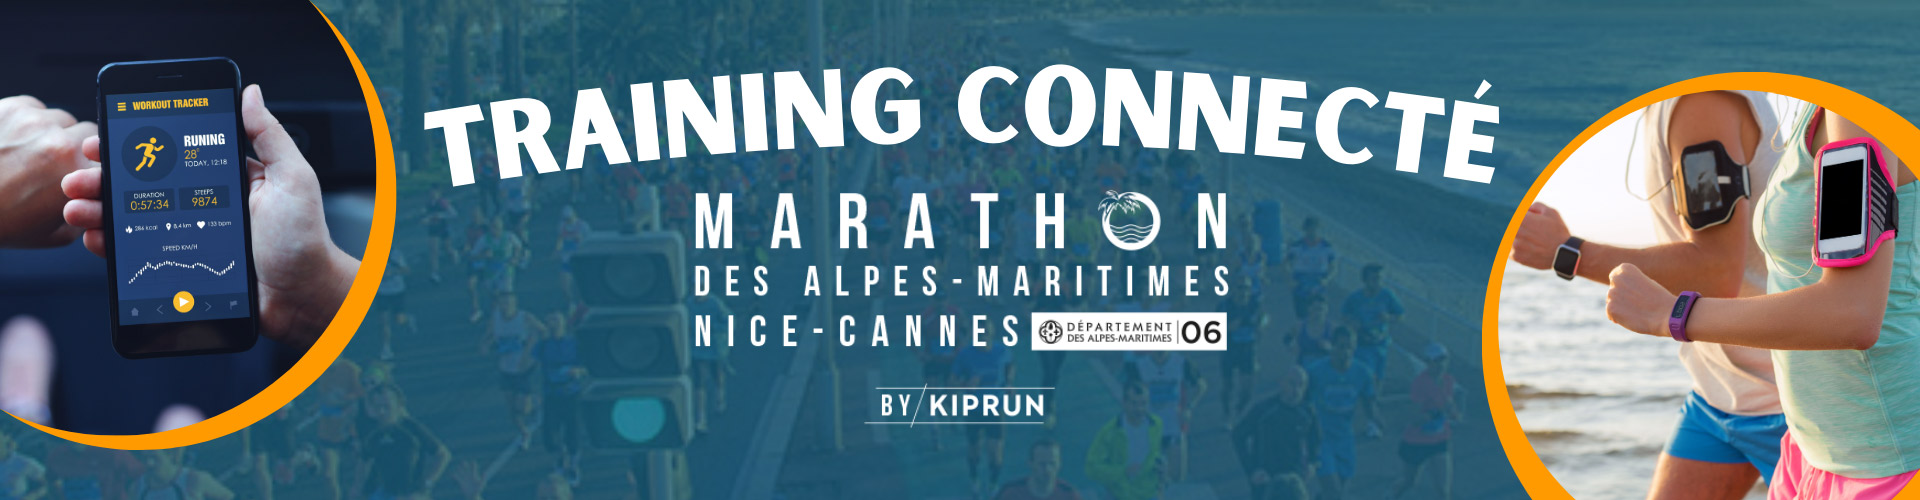 Training connecté : Semi-Marathon de Nice